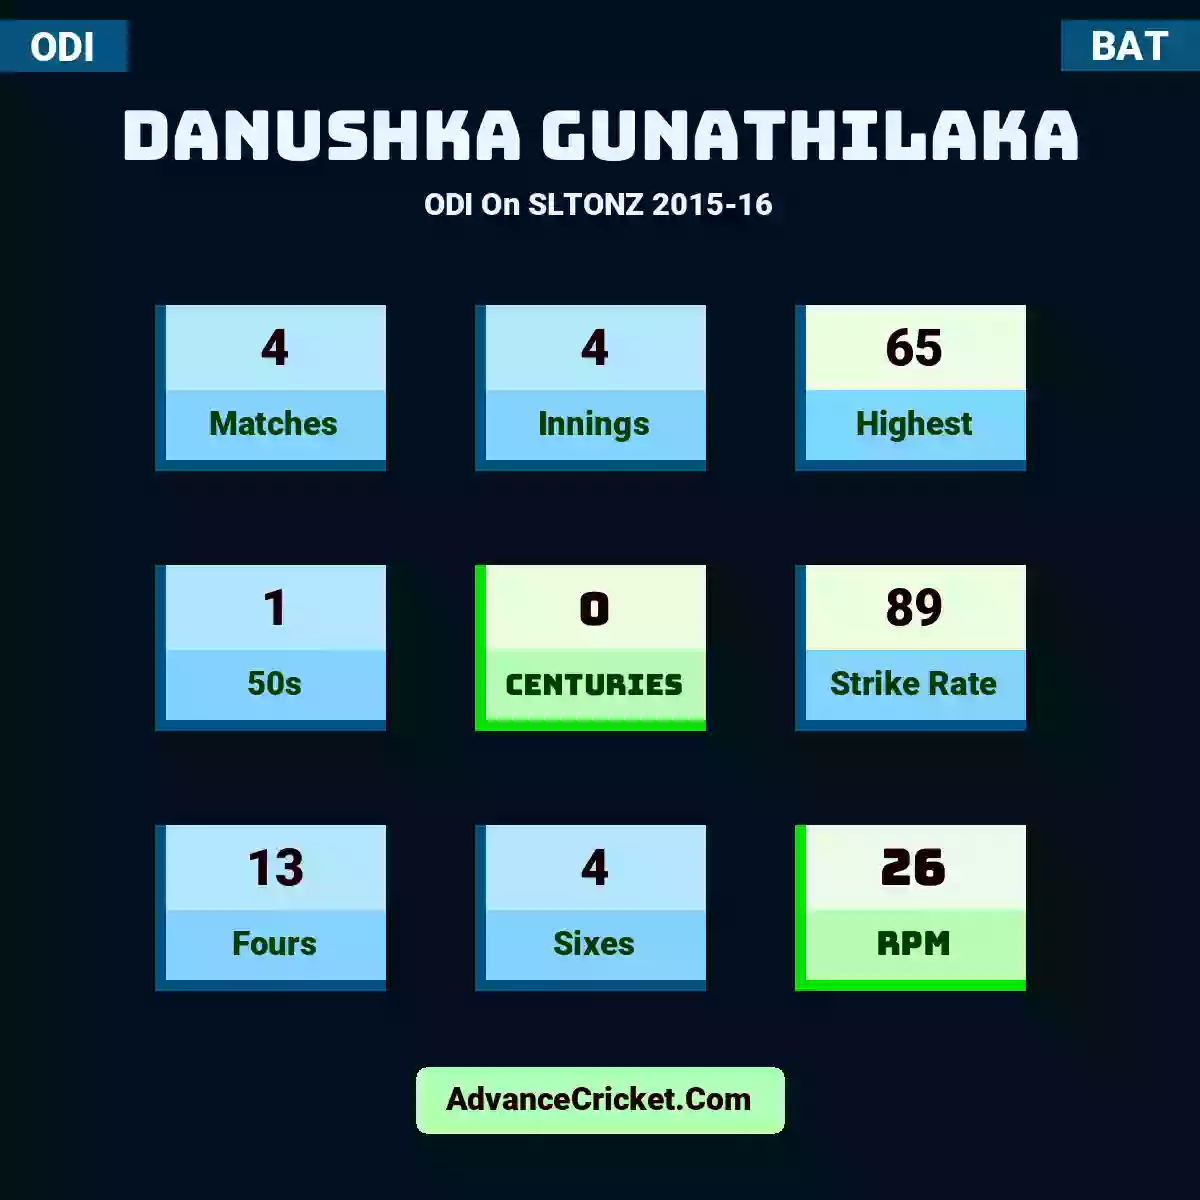 Danushka Gunathilaka ODI  On SLTONZ 2015-16, Danushka Gunathilaka played 4 matches, scored 65 runs as highest, 1 half-centuries, and 0 centuries, with a strike rate of 89. D.Gunathilaka hit 13 fours and 4 sixes, with an RPM of 26.